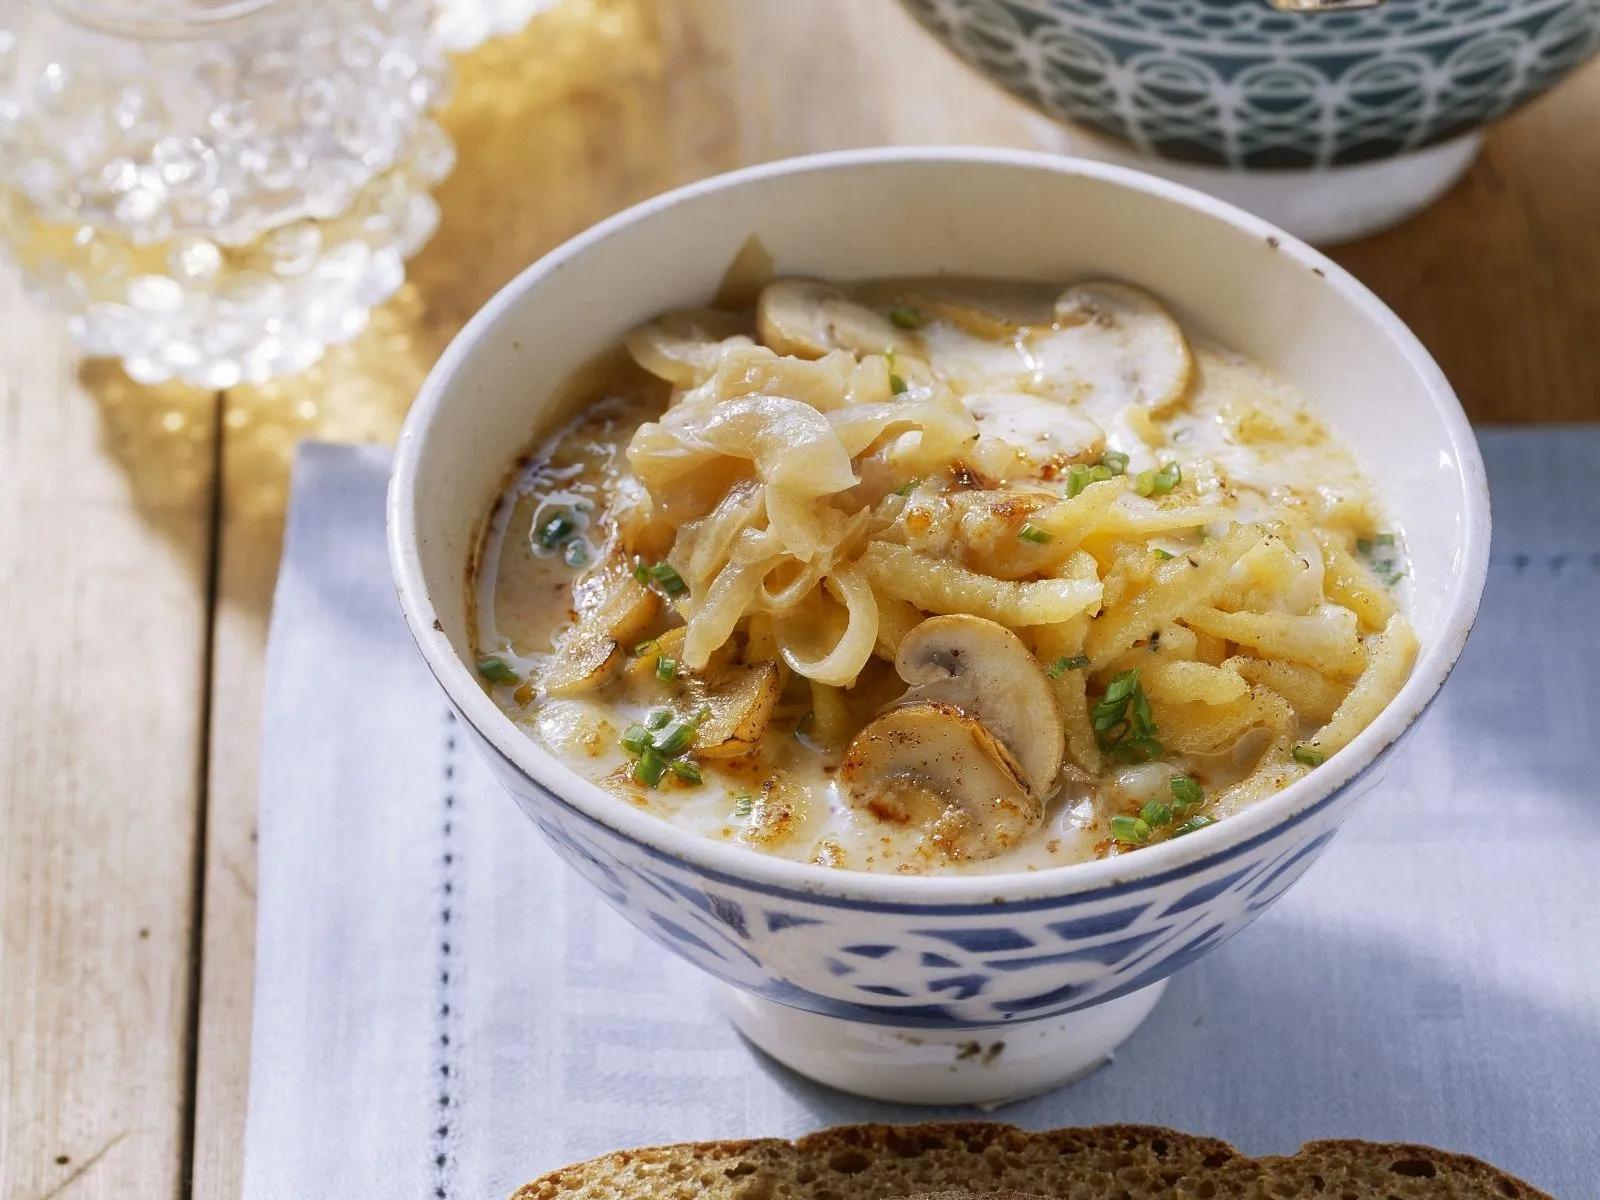 Käse-Champignon-Suppe mit Spätzle Rezept | EAT SMARTER